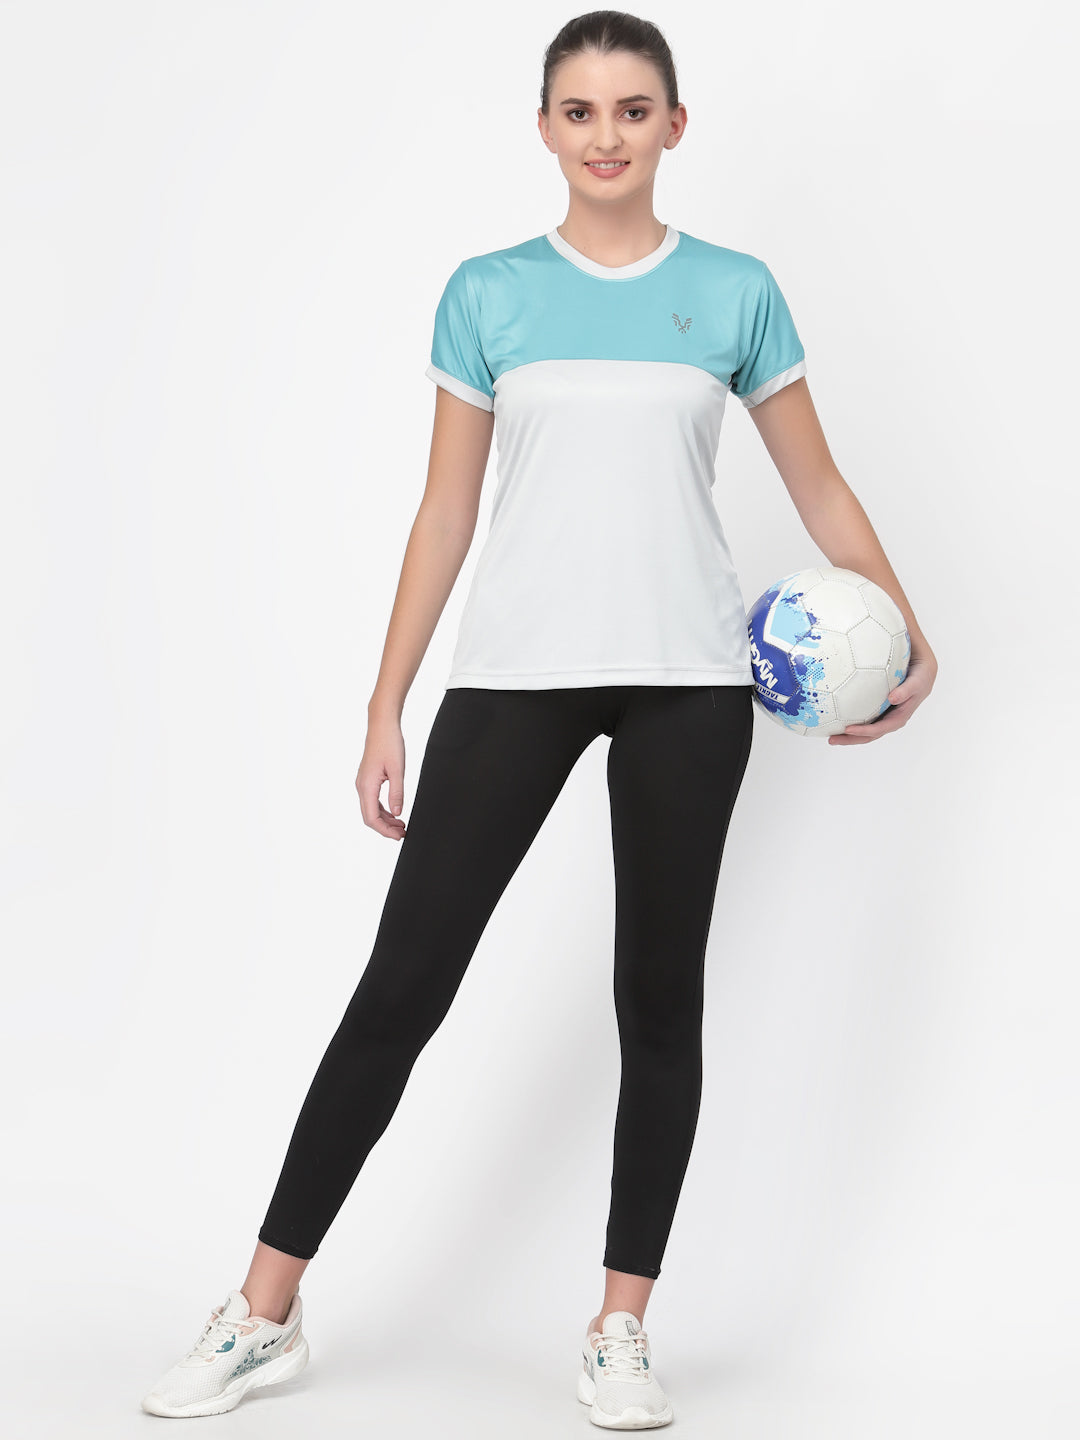 UZARUS Women's Dry Fit Workout Top Sports Gym T-Shirt